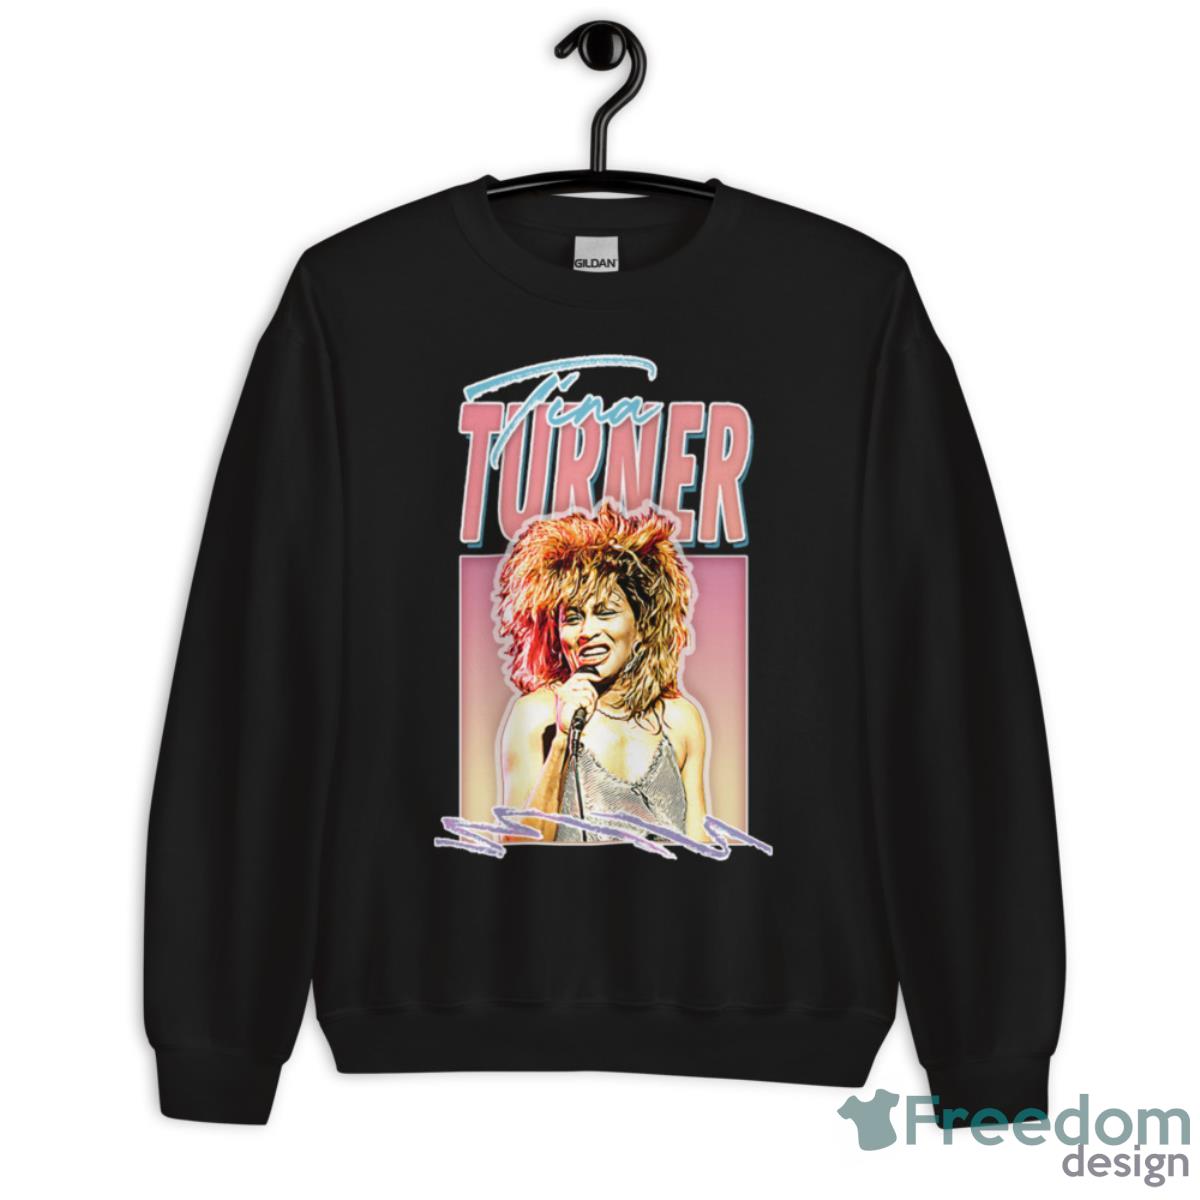 Tina Turner 80s Style Retro Fan Art Design Shirt